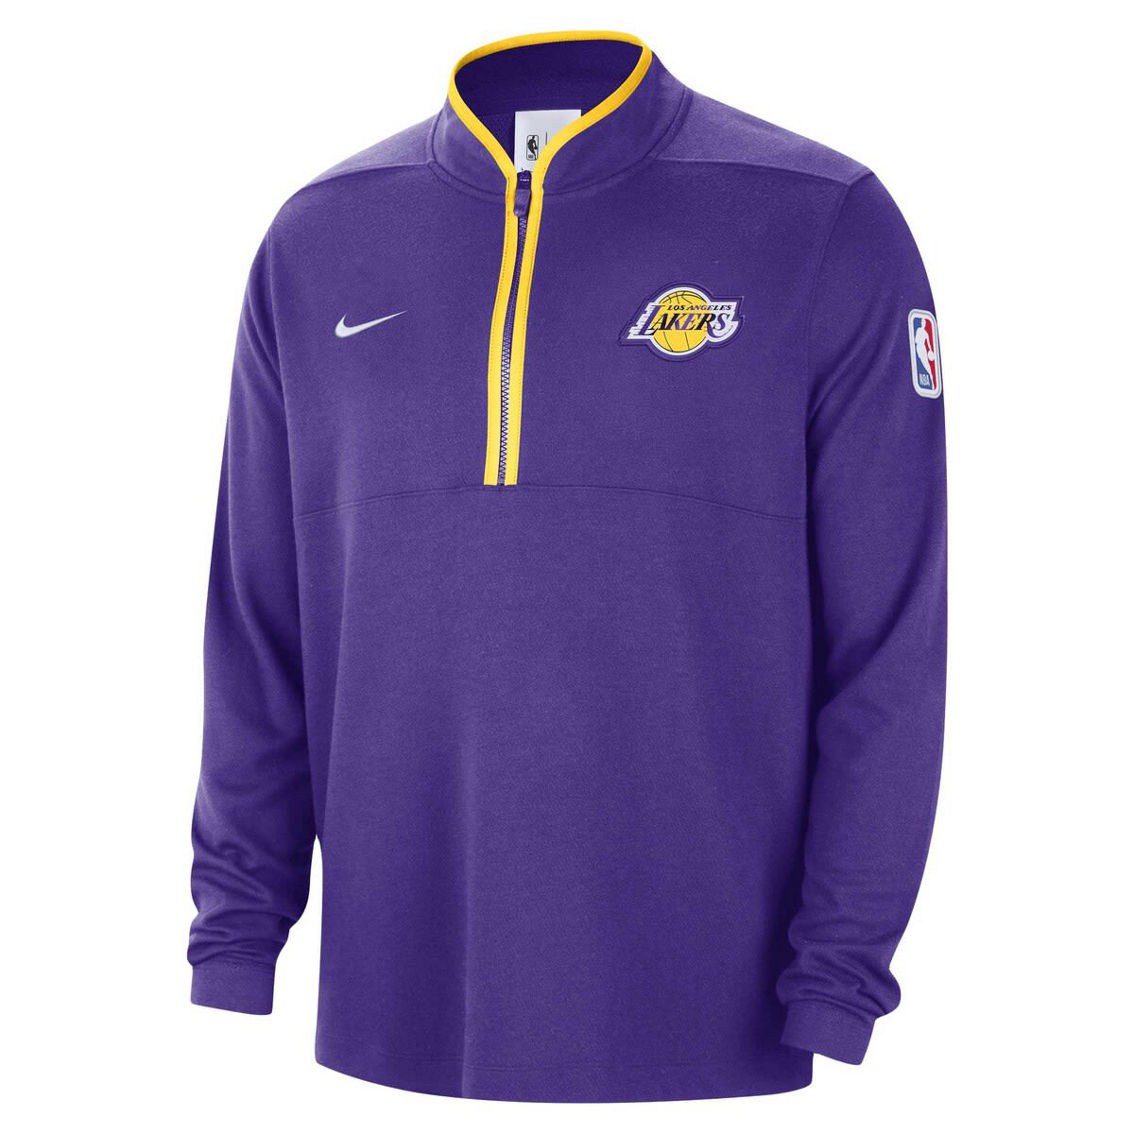 Nike Men's Purple Los Angeles Lakers Authentic Performance Half-Zip Jacket - Image 3 of 4